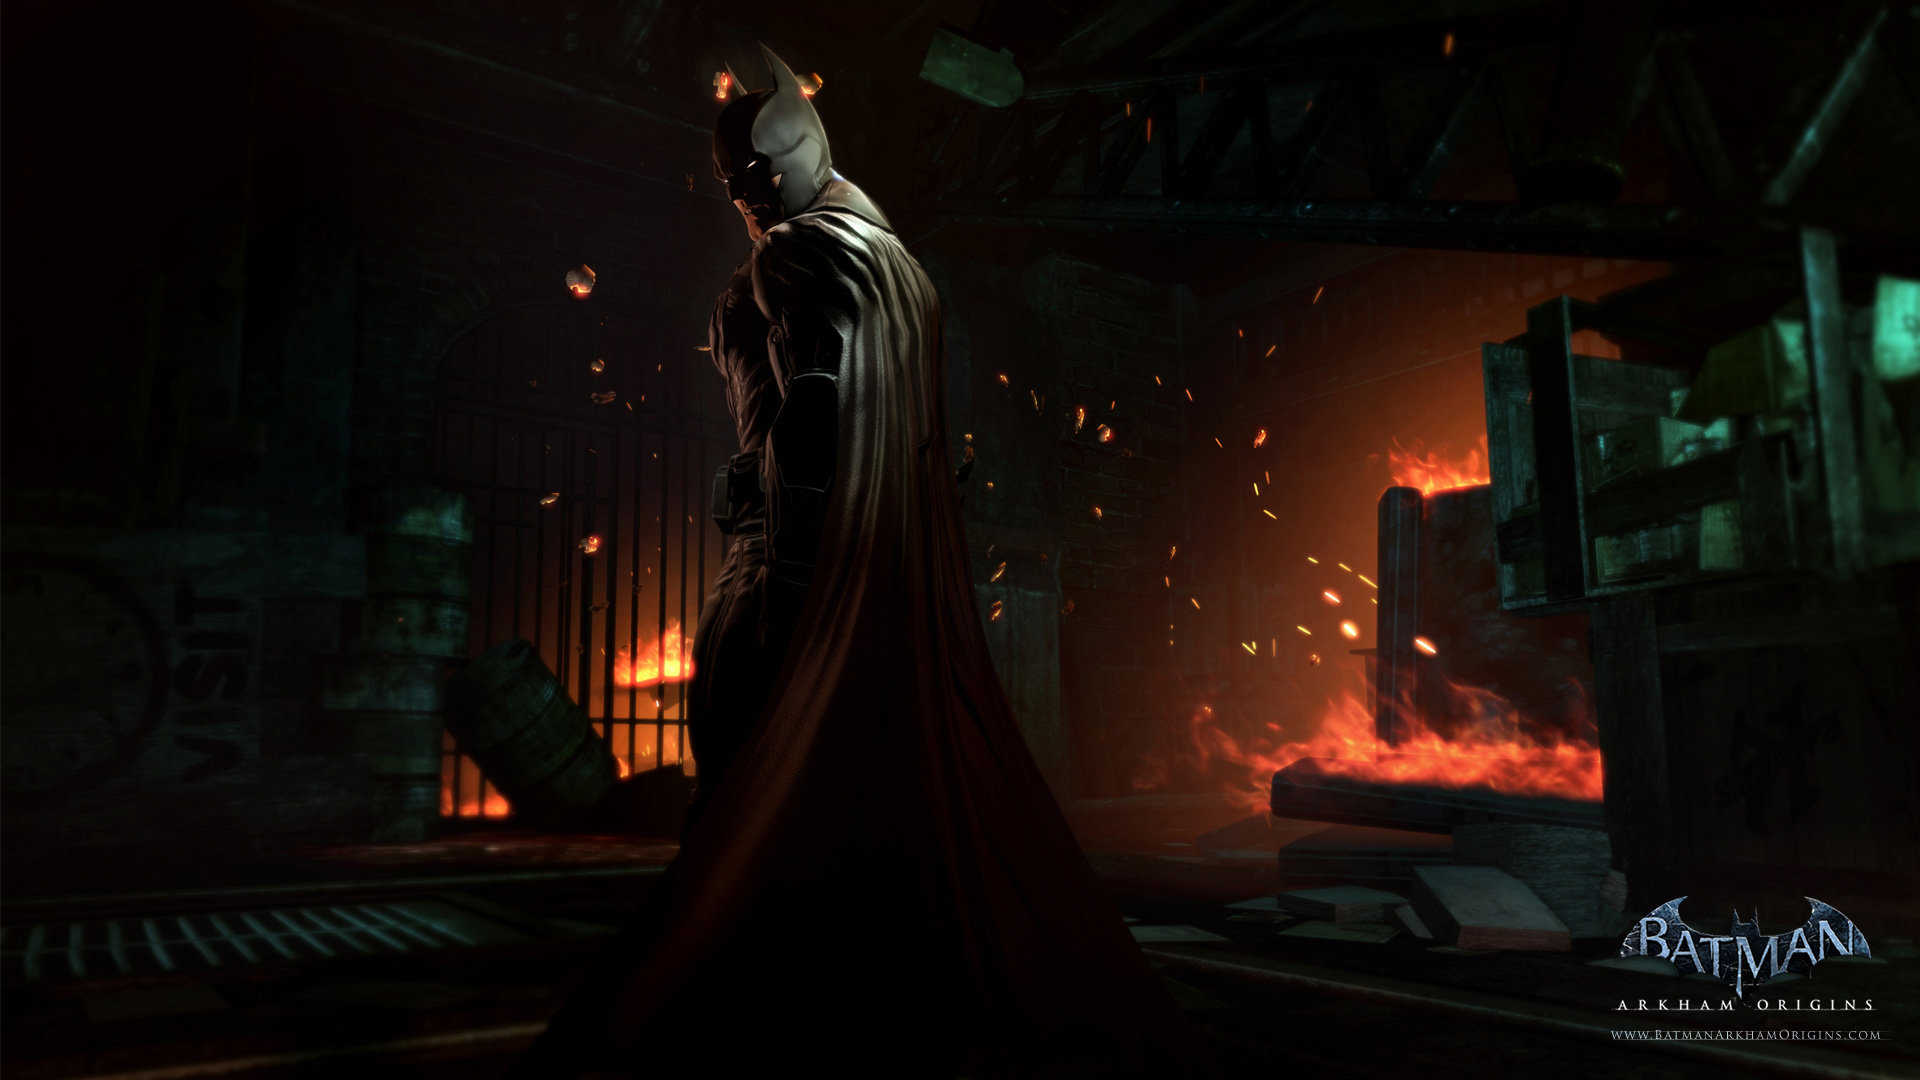 Awesome Batman: Arkham Origins free wallpaper ID:323012 for 1080p computer